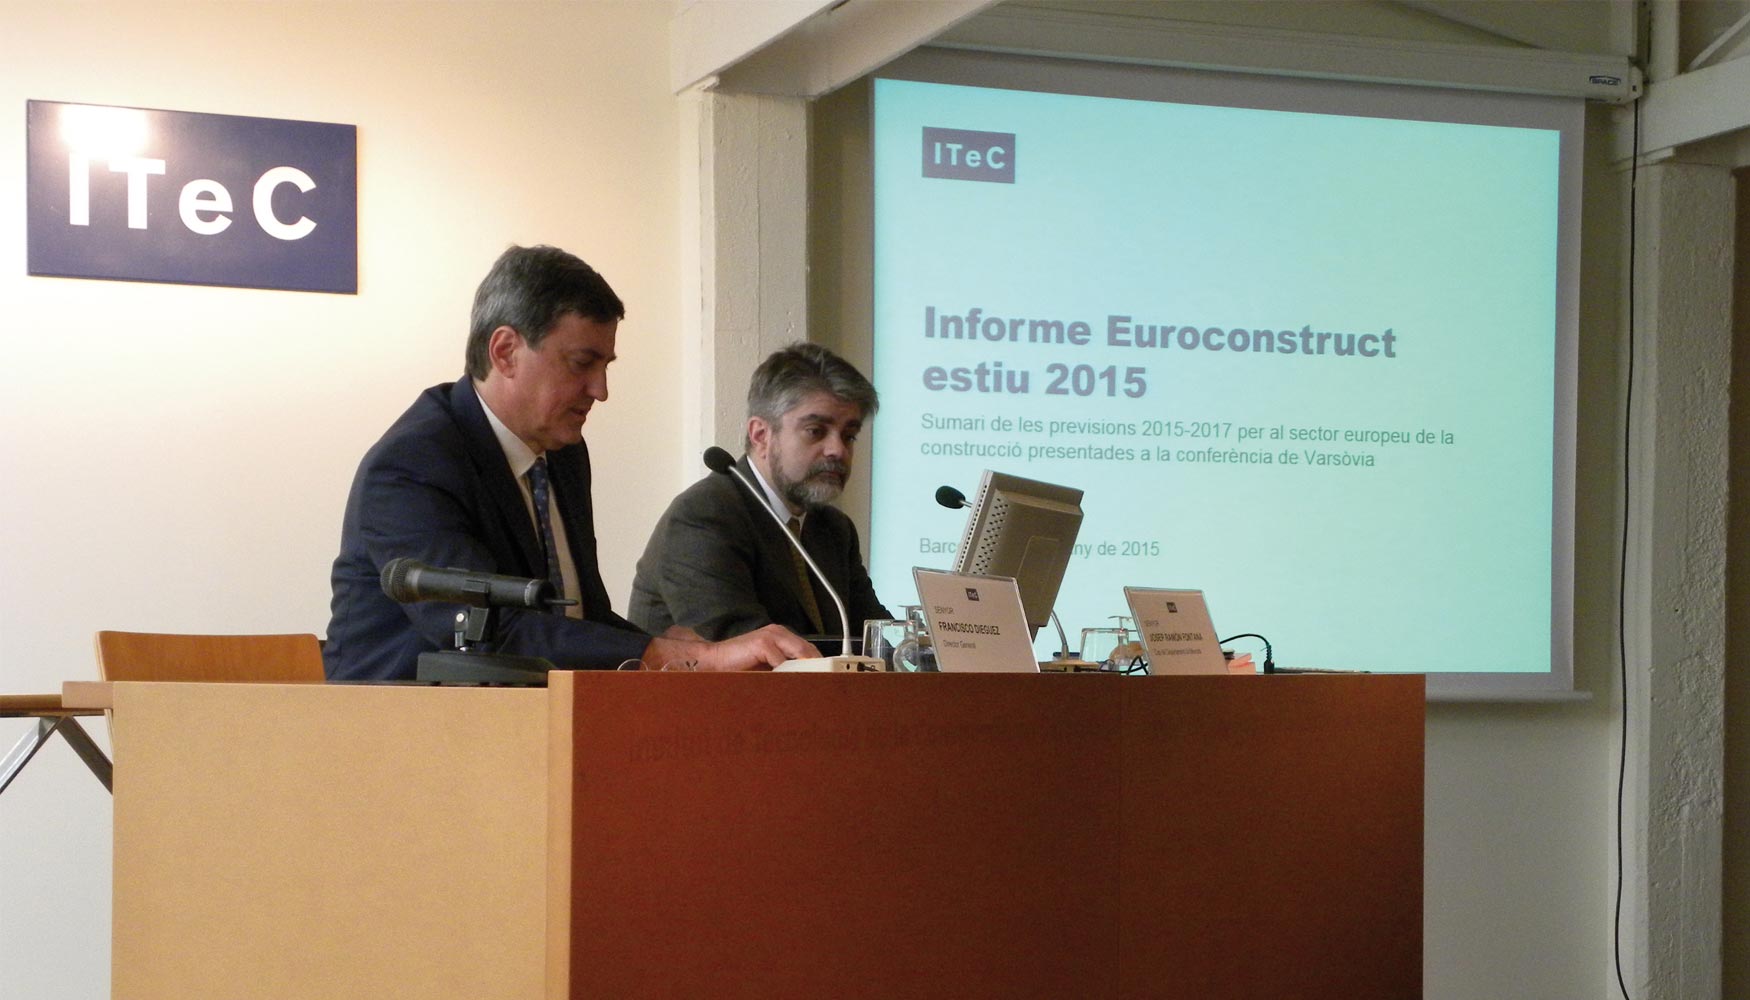 Francisco Diguez, director general del ITeC, y Josep R. Fontana, jefe del Departamento de Mercados del ITeC